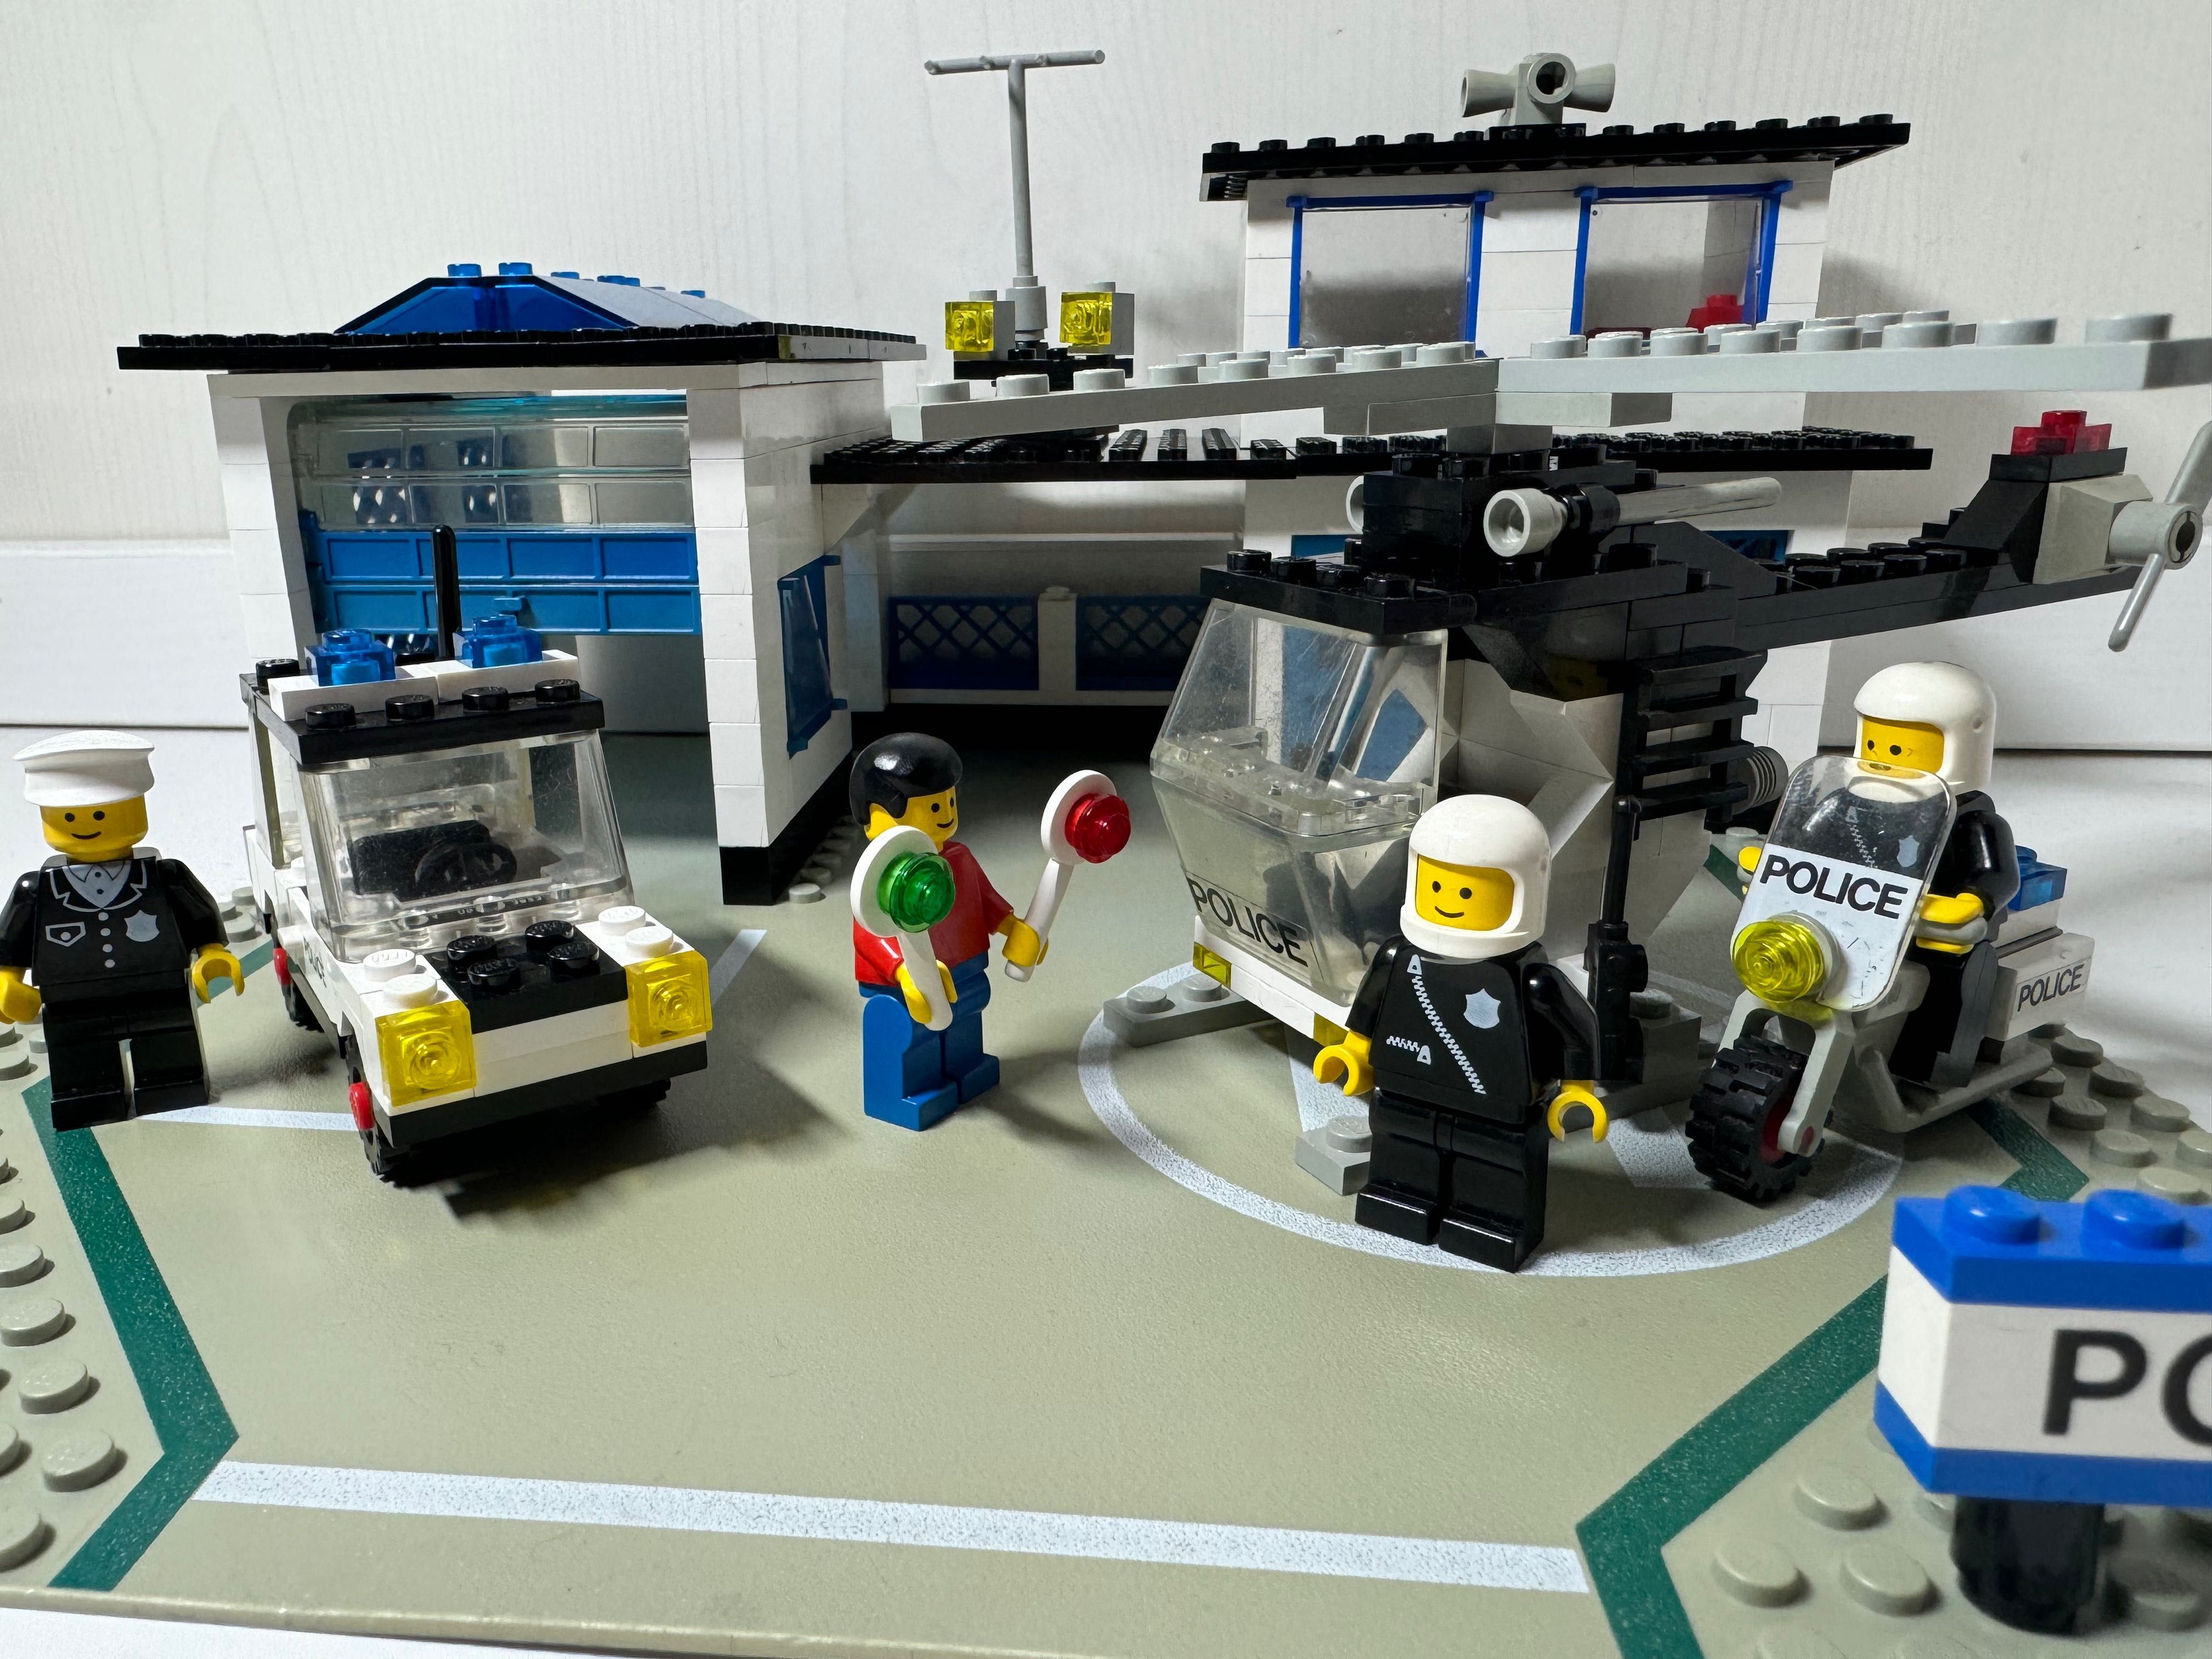 LEGO classic town; zestaw 6384 Police Station